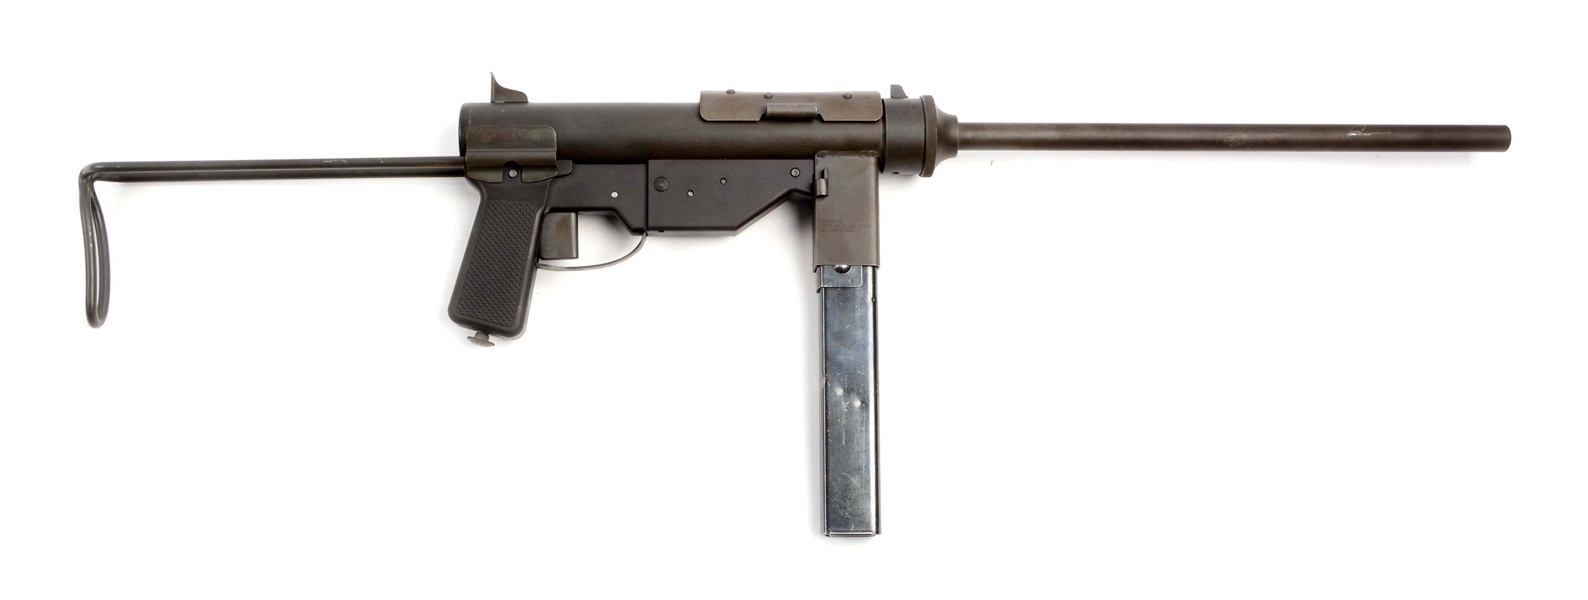 (M) VALKYRIE ARMS M3A1 (GREASE GUN) SEMI-AUTOMATIC CARBINE.